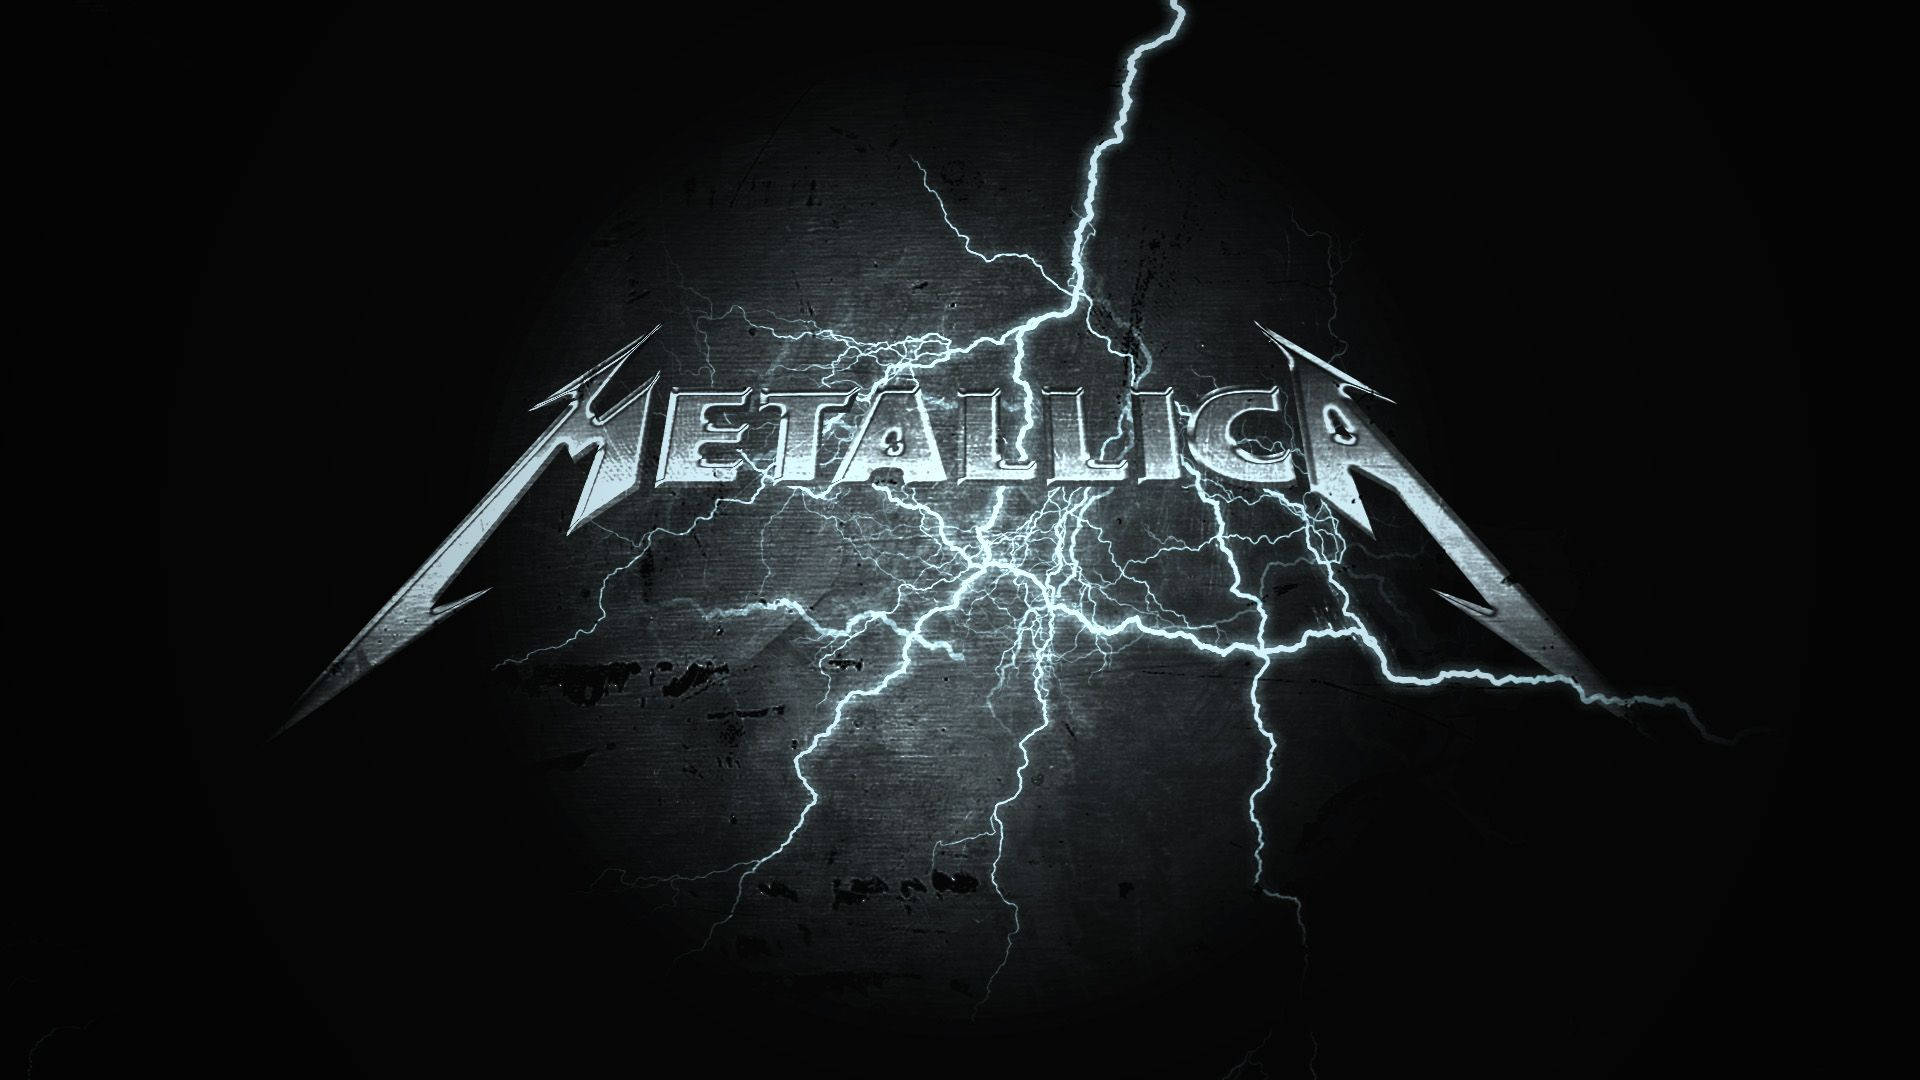 Metallica Logo In Lightning